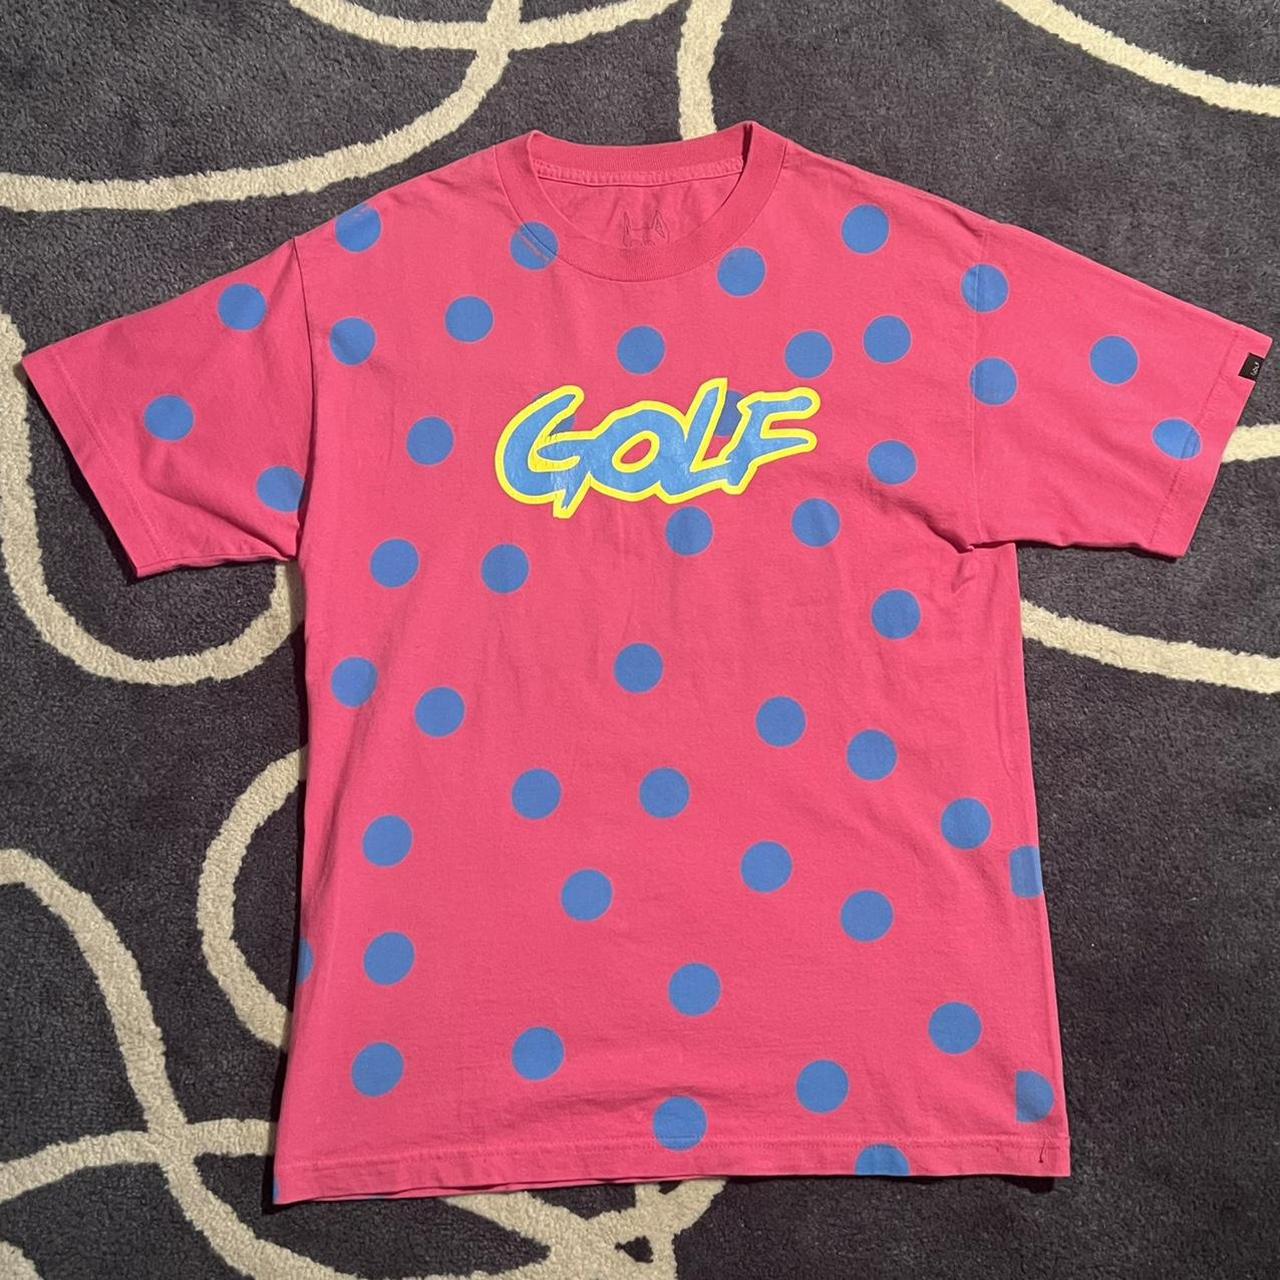 Golf Wang Polka Dot T Shirt F/W 2013 in amazing - Depop